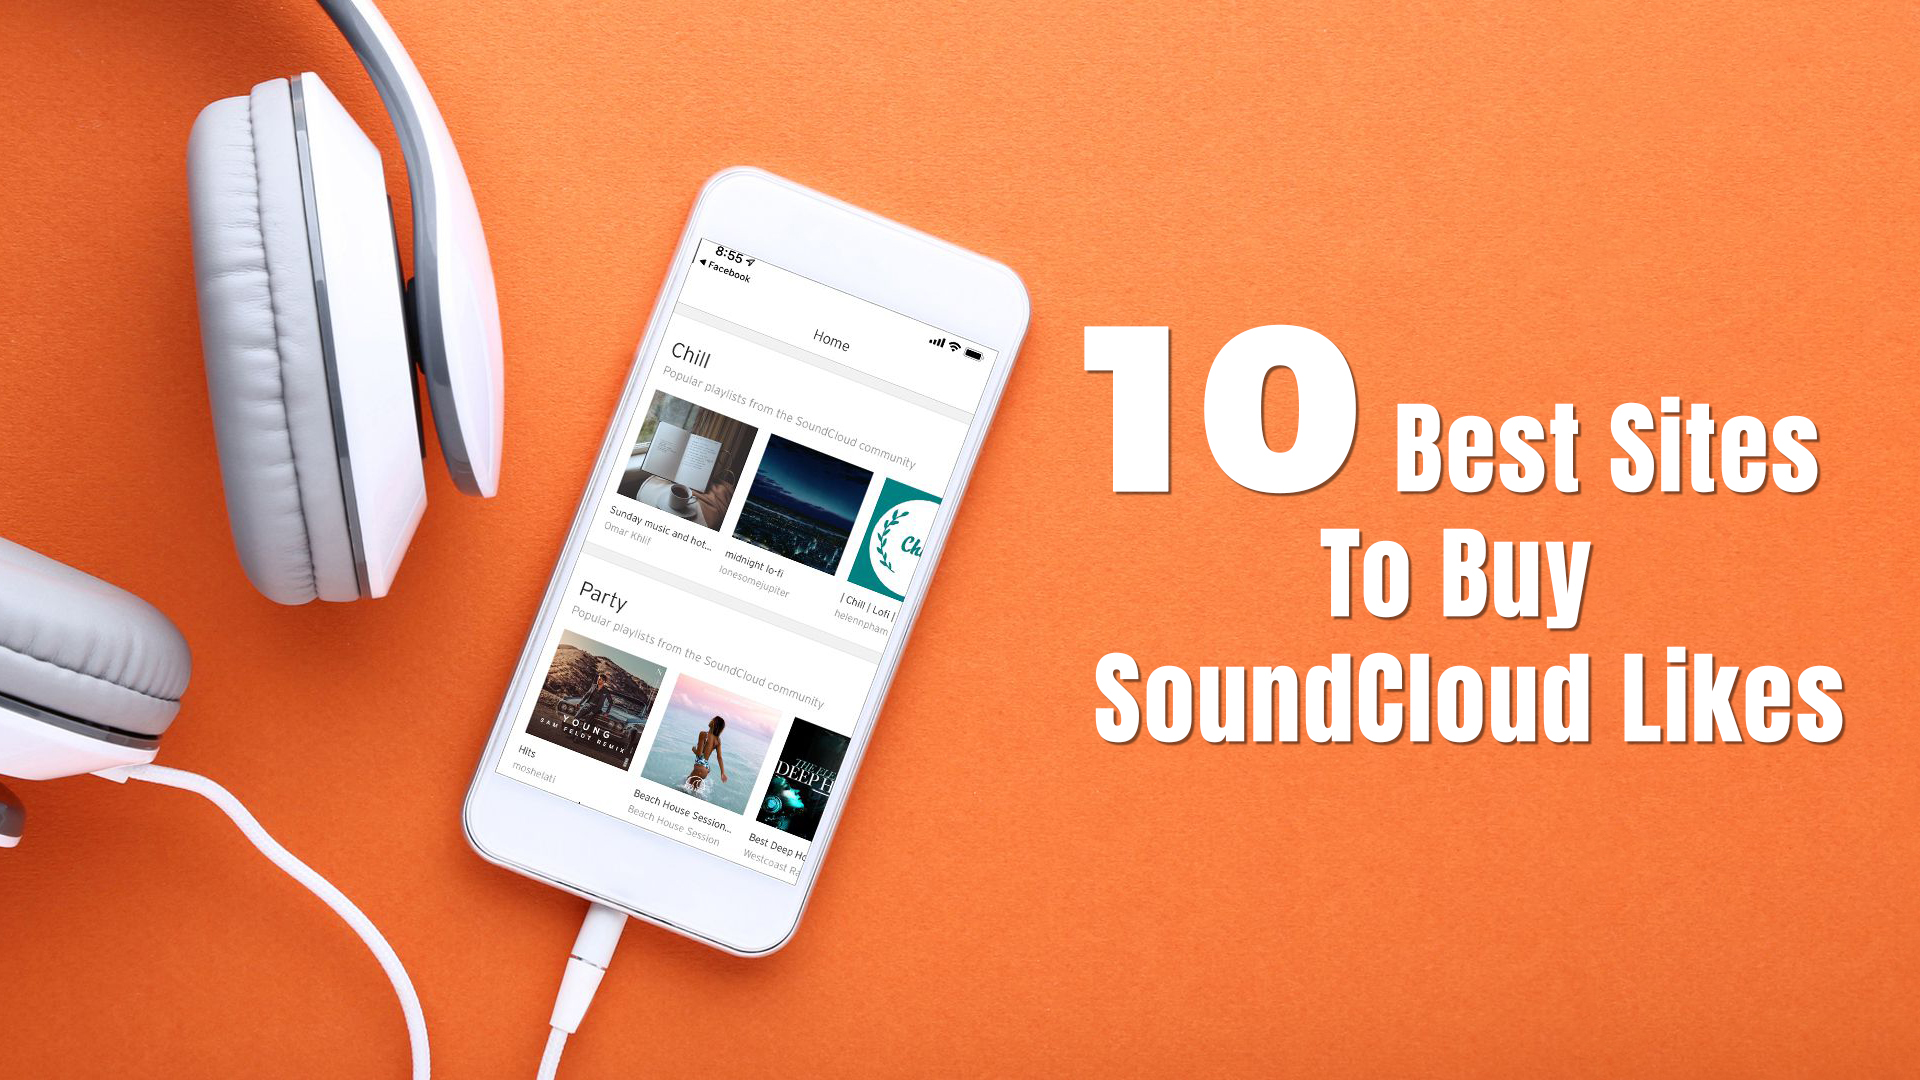 Buy 500 SoundCloud Likes